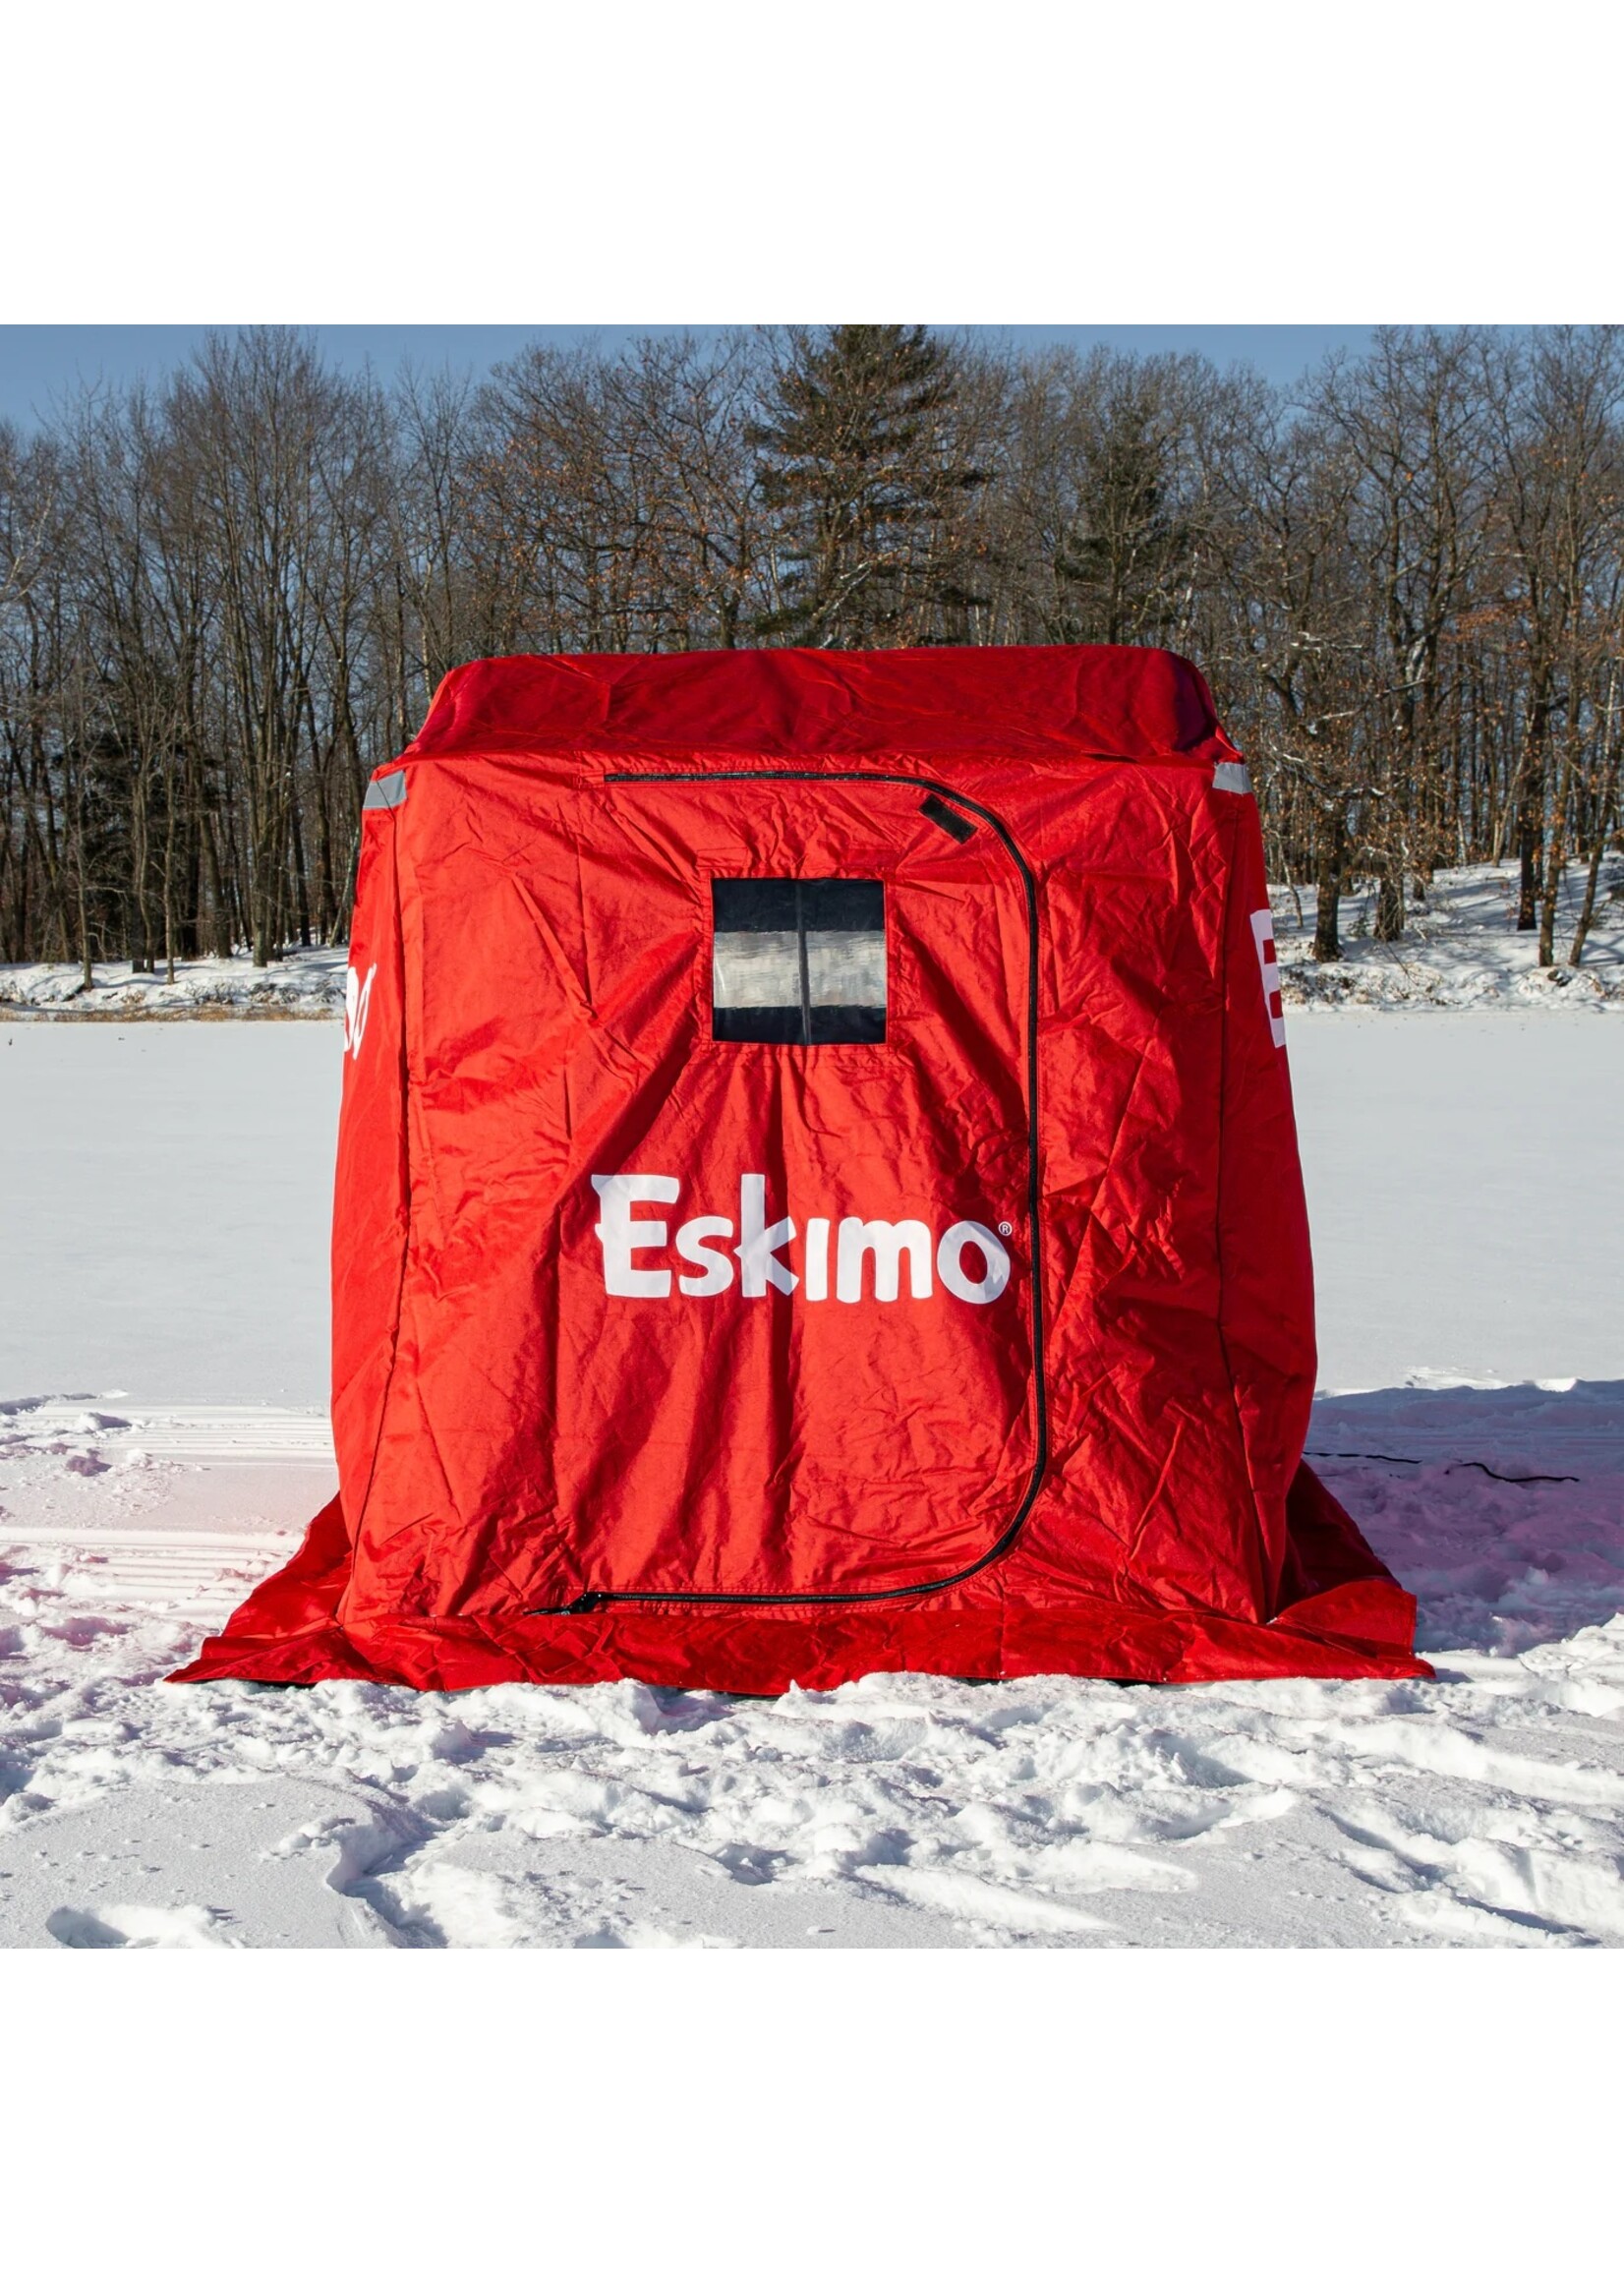 Eskimo Sierra Lightweight 2man Flip Ice Shelter - Tackle Shack